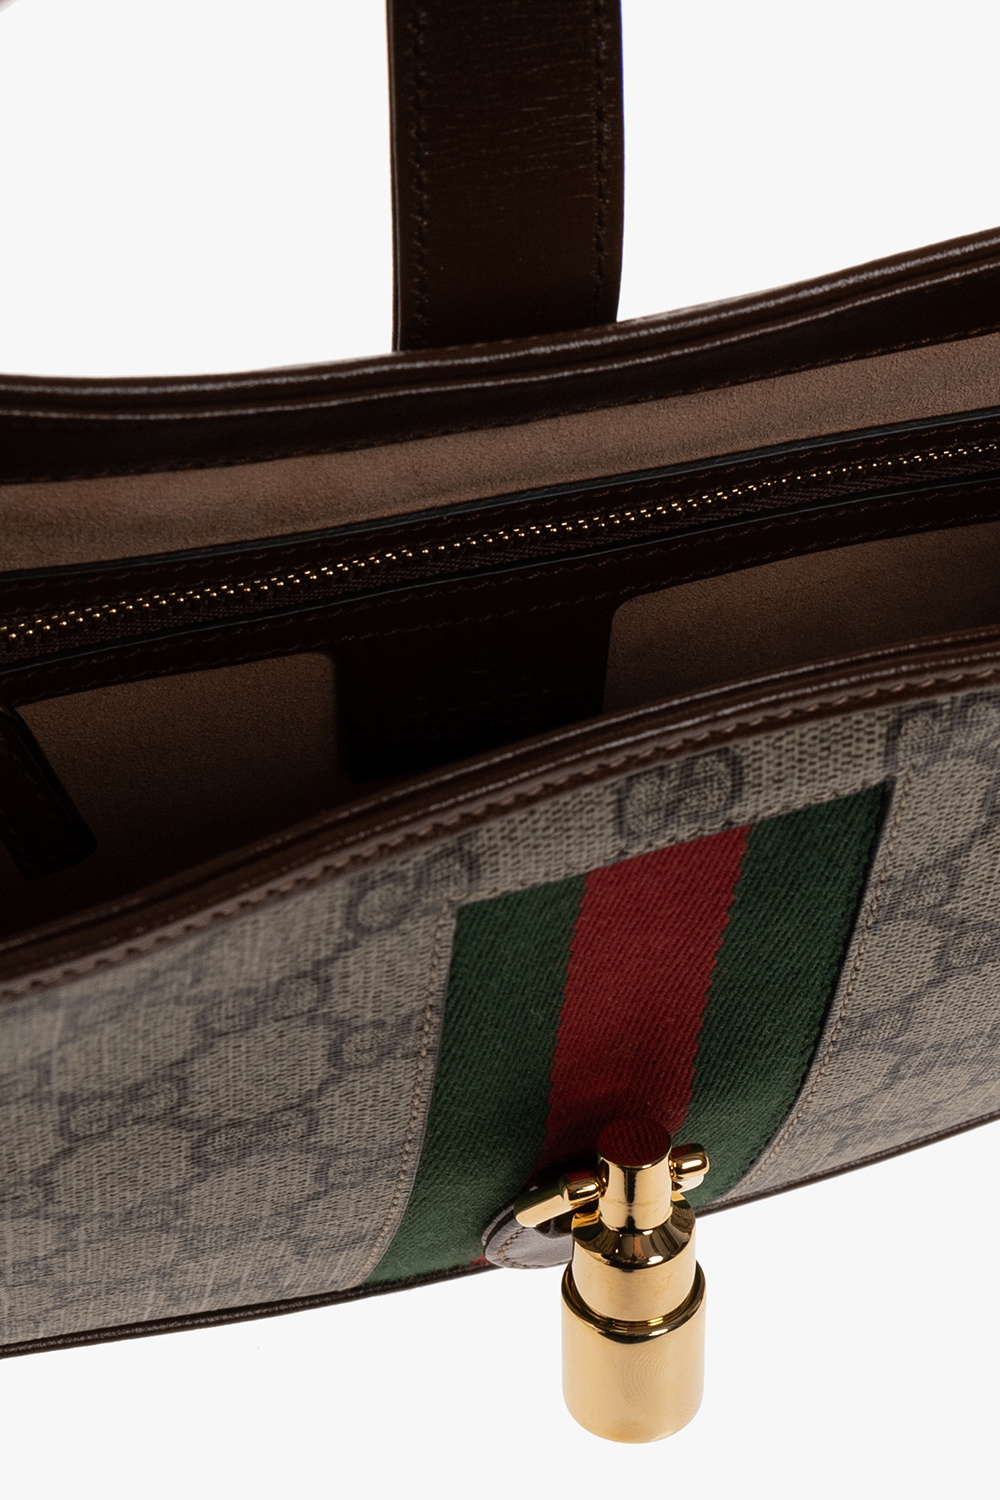 Gucci ‘Jackie 1961 Small’ shoulder bag